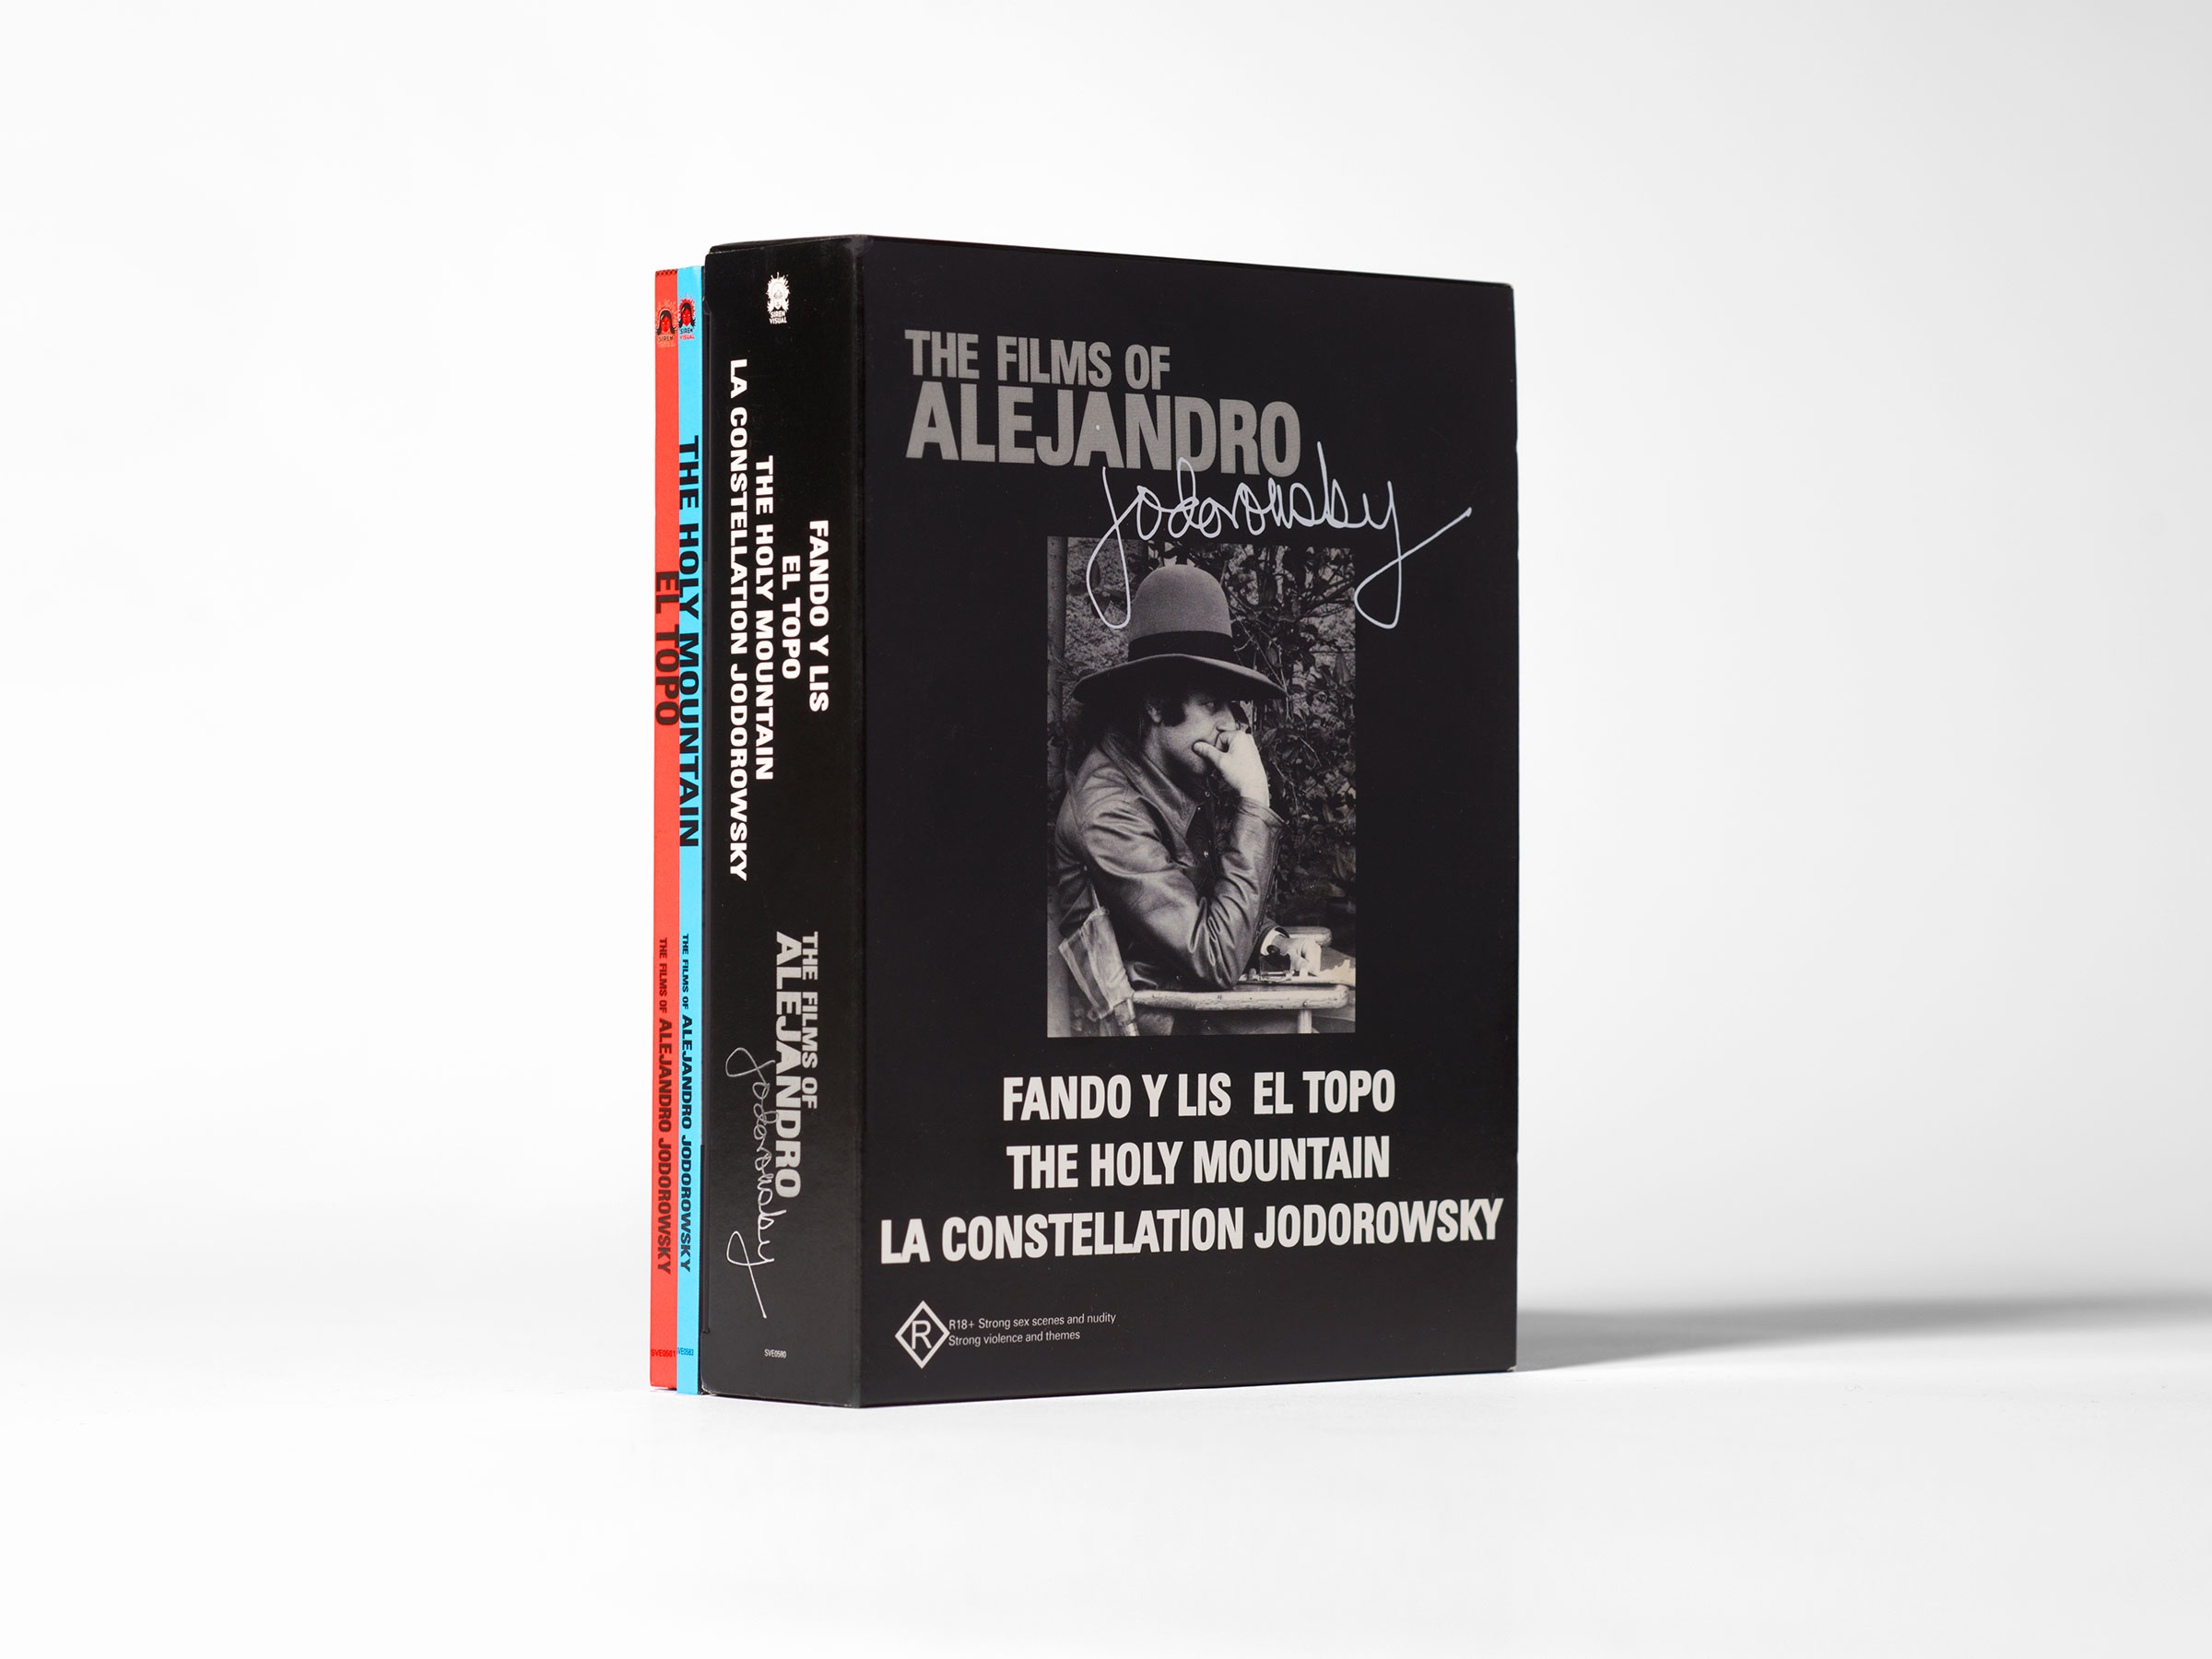 The Films of Alejandro Jodorowsky